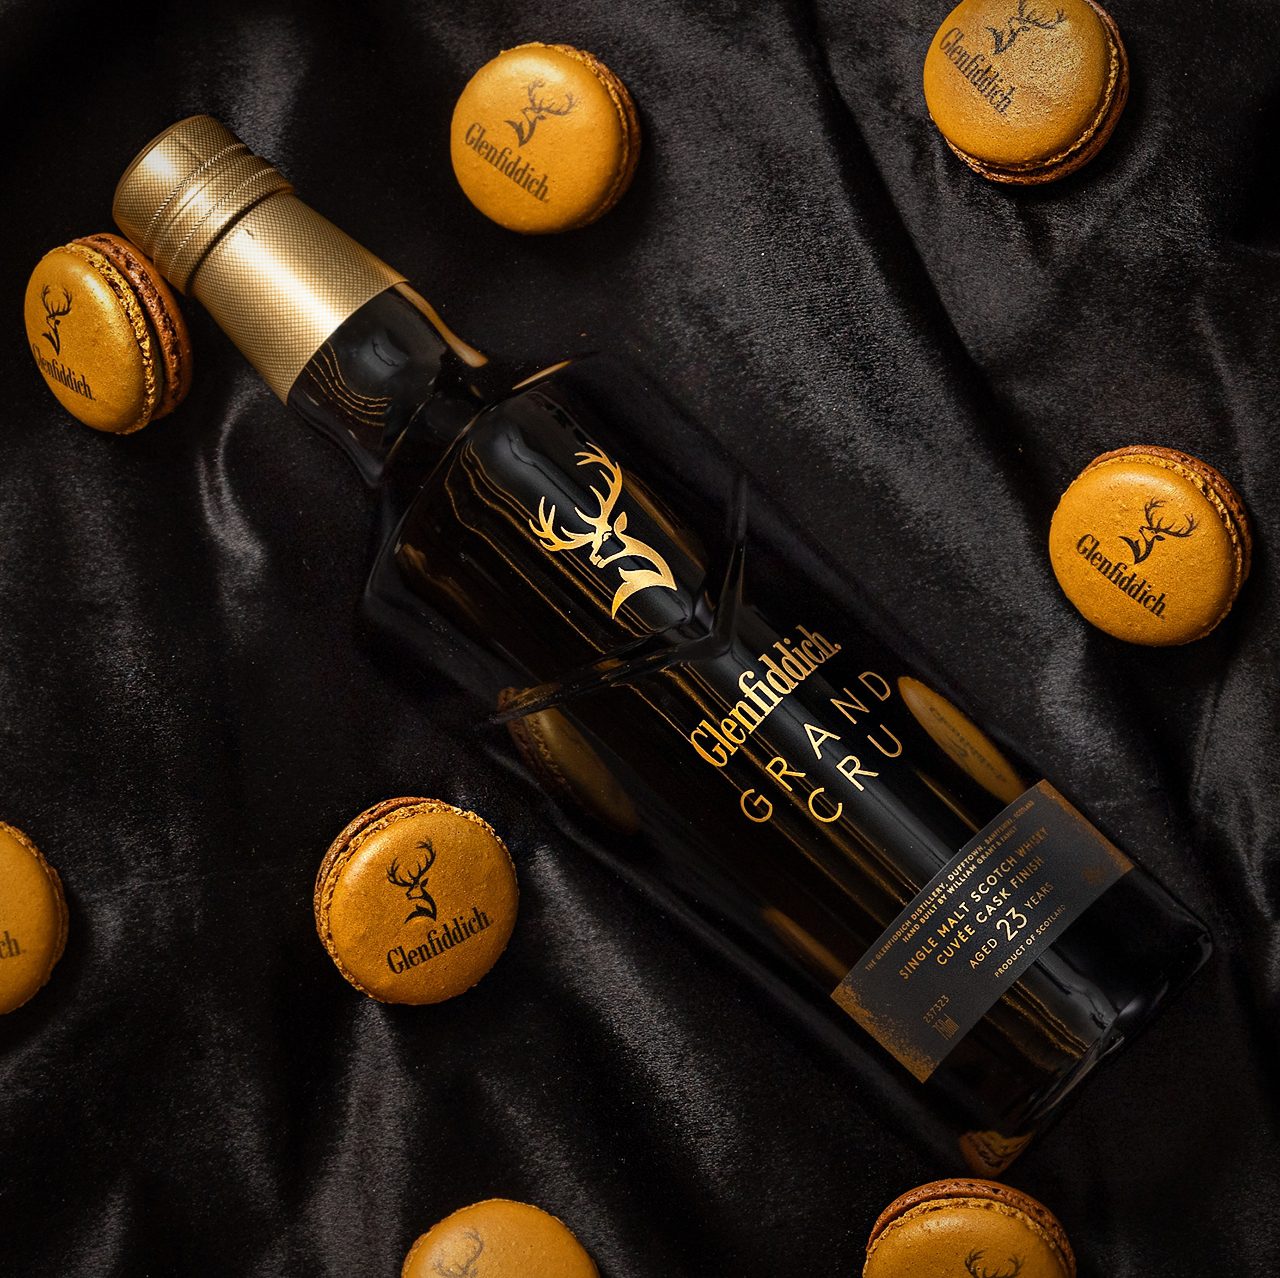 Glenfiddich x Thierry Atlan gourmet whisky-infused macaron via 360 MAGAZINE.